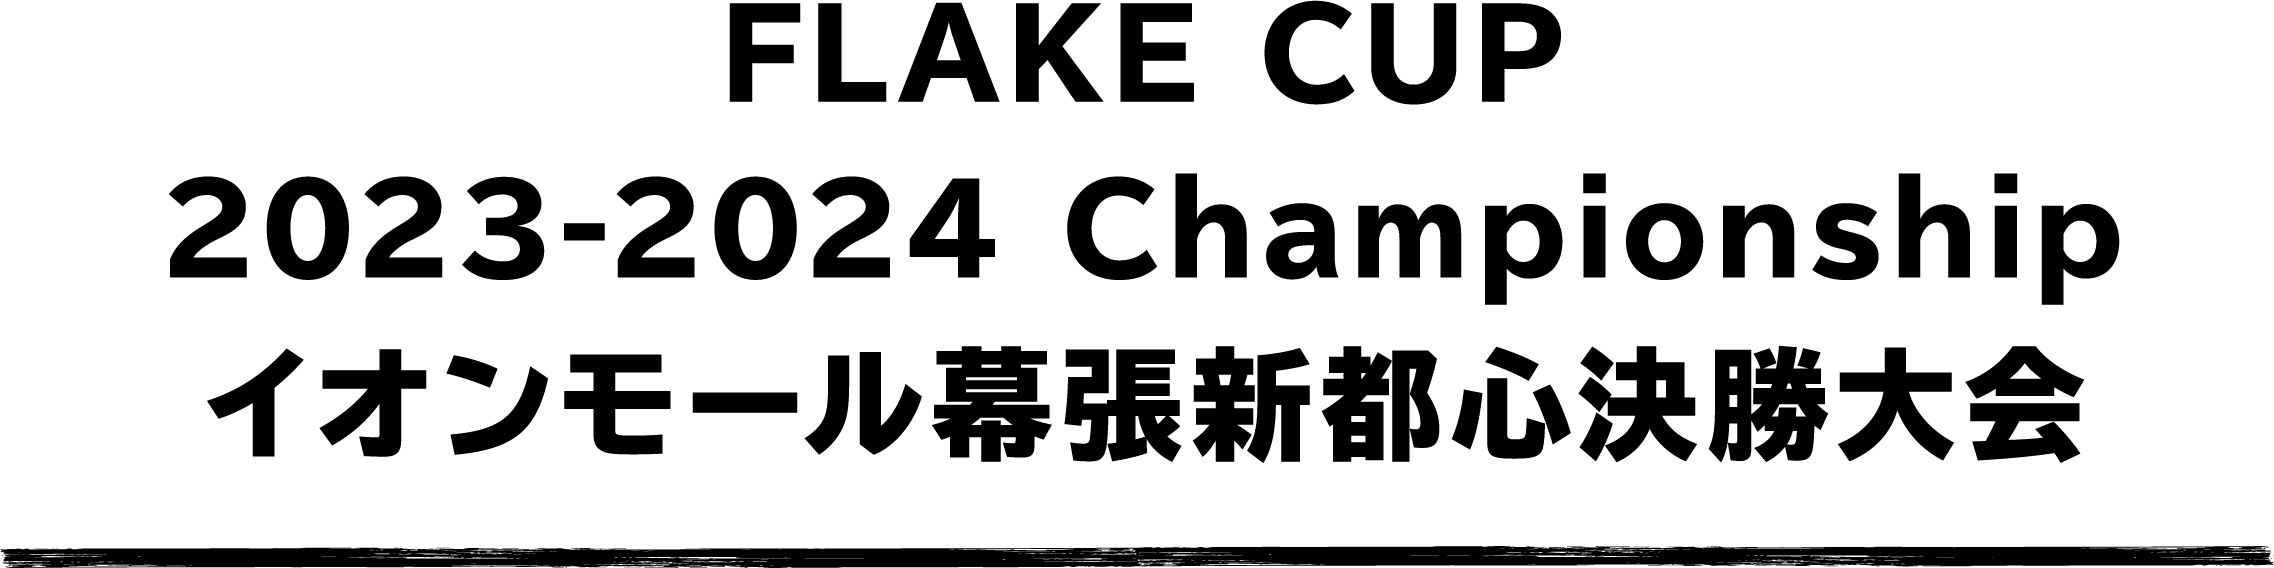 FLAKE CUP 2023-2024 Championship イオンモール幕張新都心決勝大会